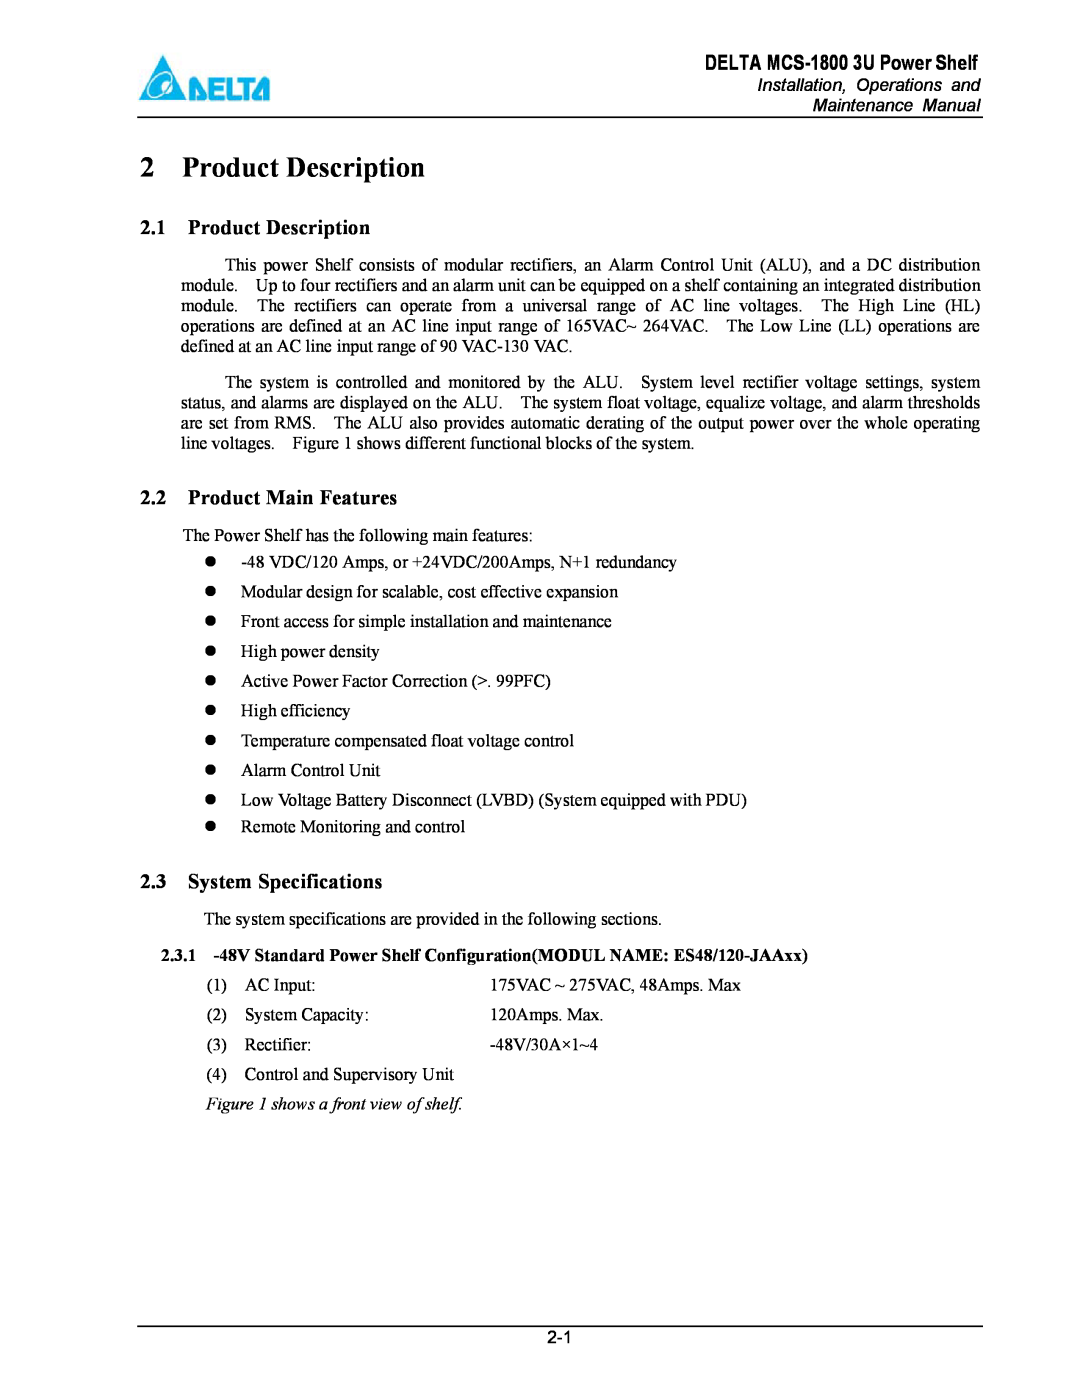 Delta manual Product Description, DELTA MCS-1800 3U Power Shelf, Product Main Features, System Specifications 